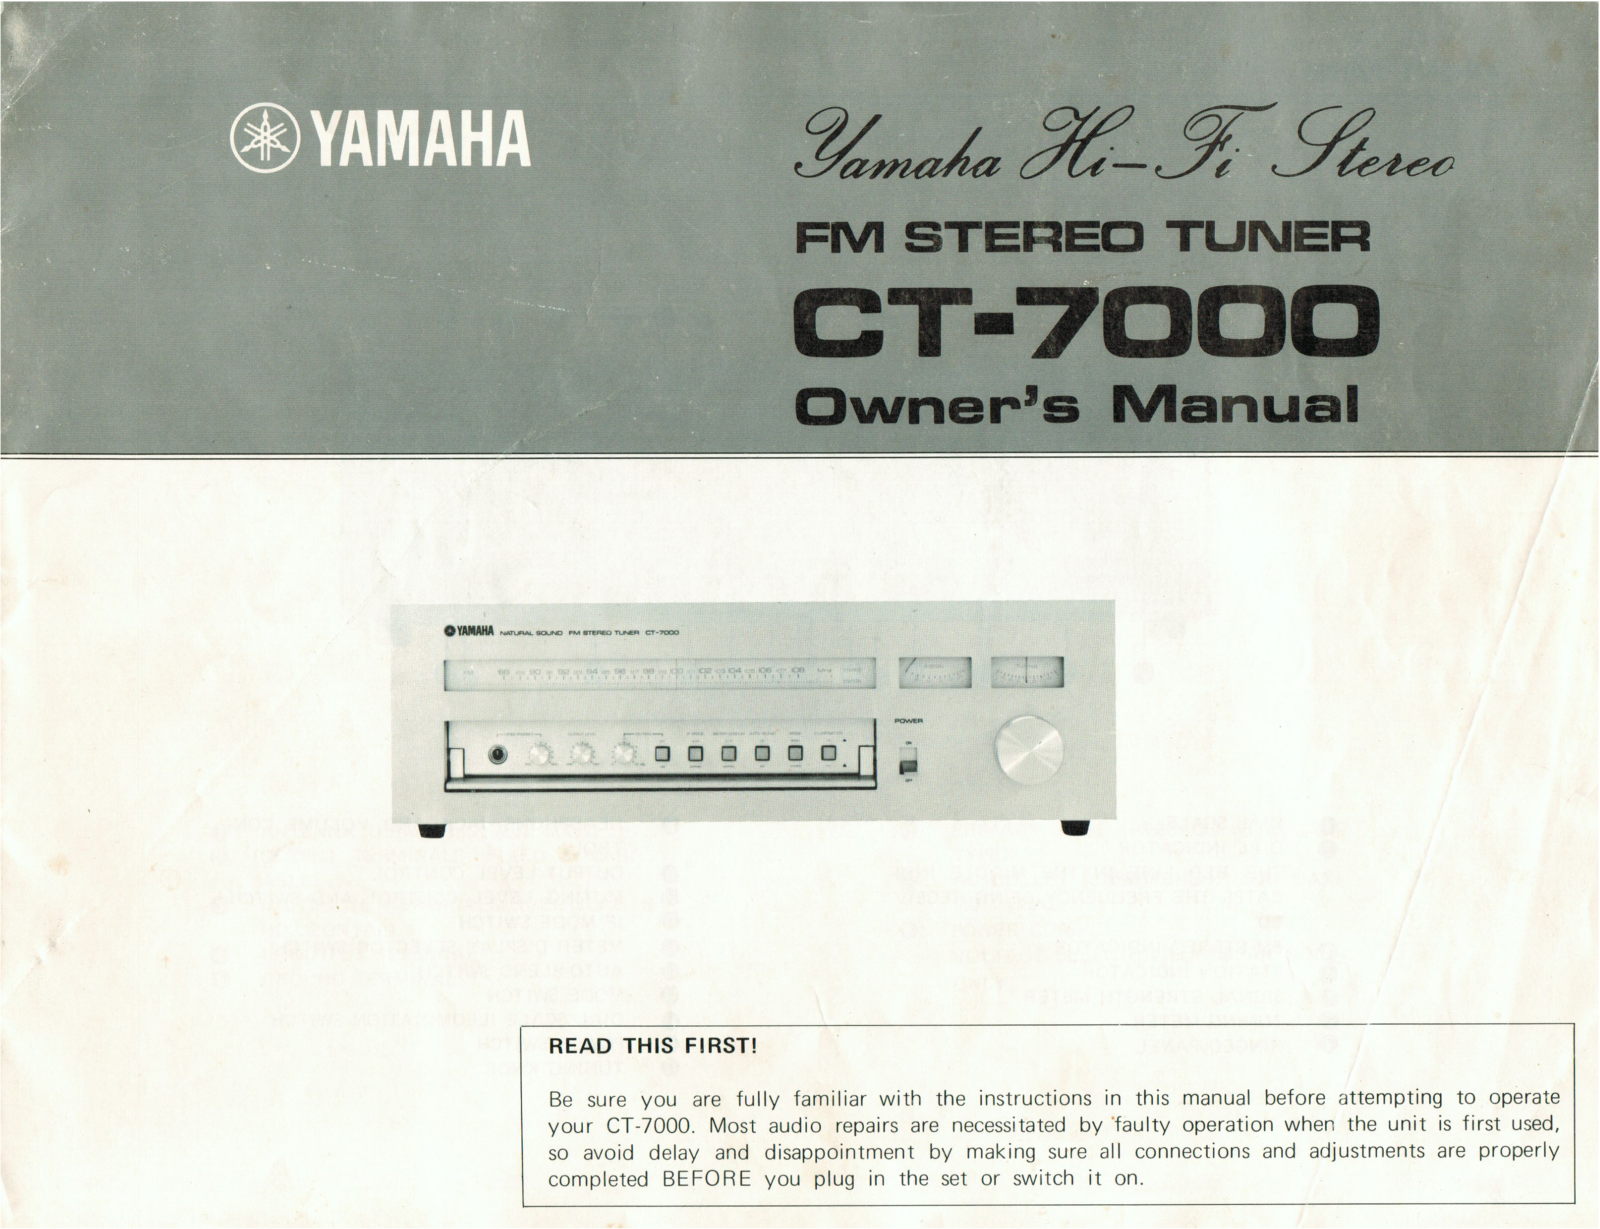 Yamaha CT-7000 Owners Manual